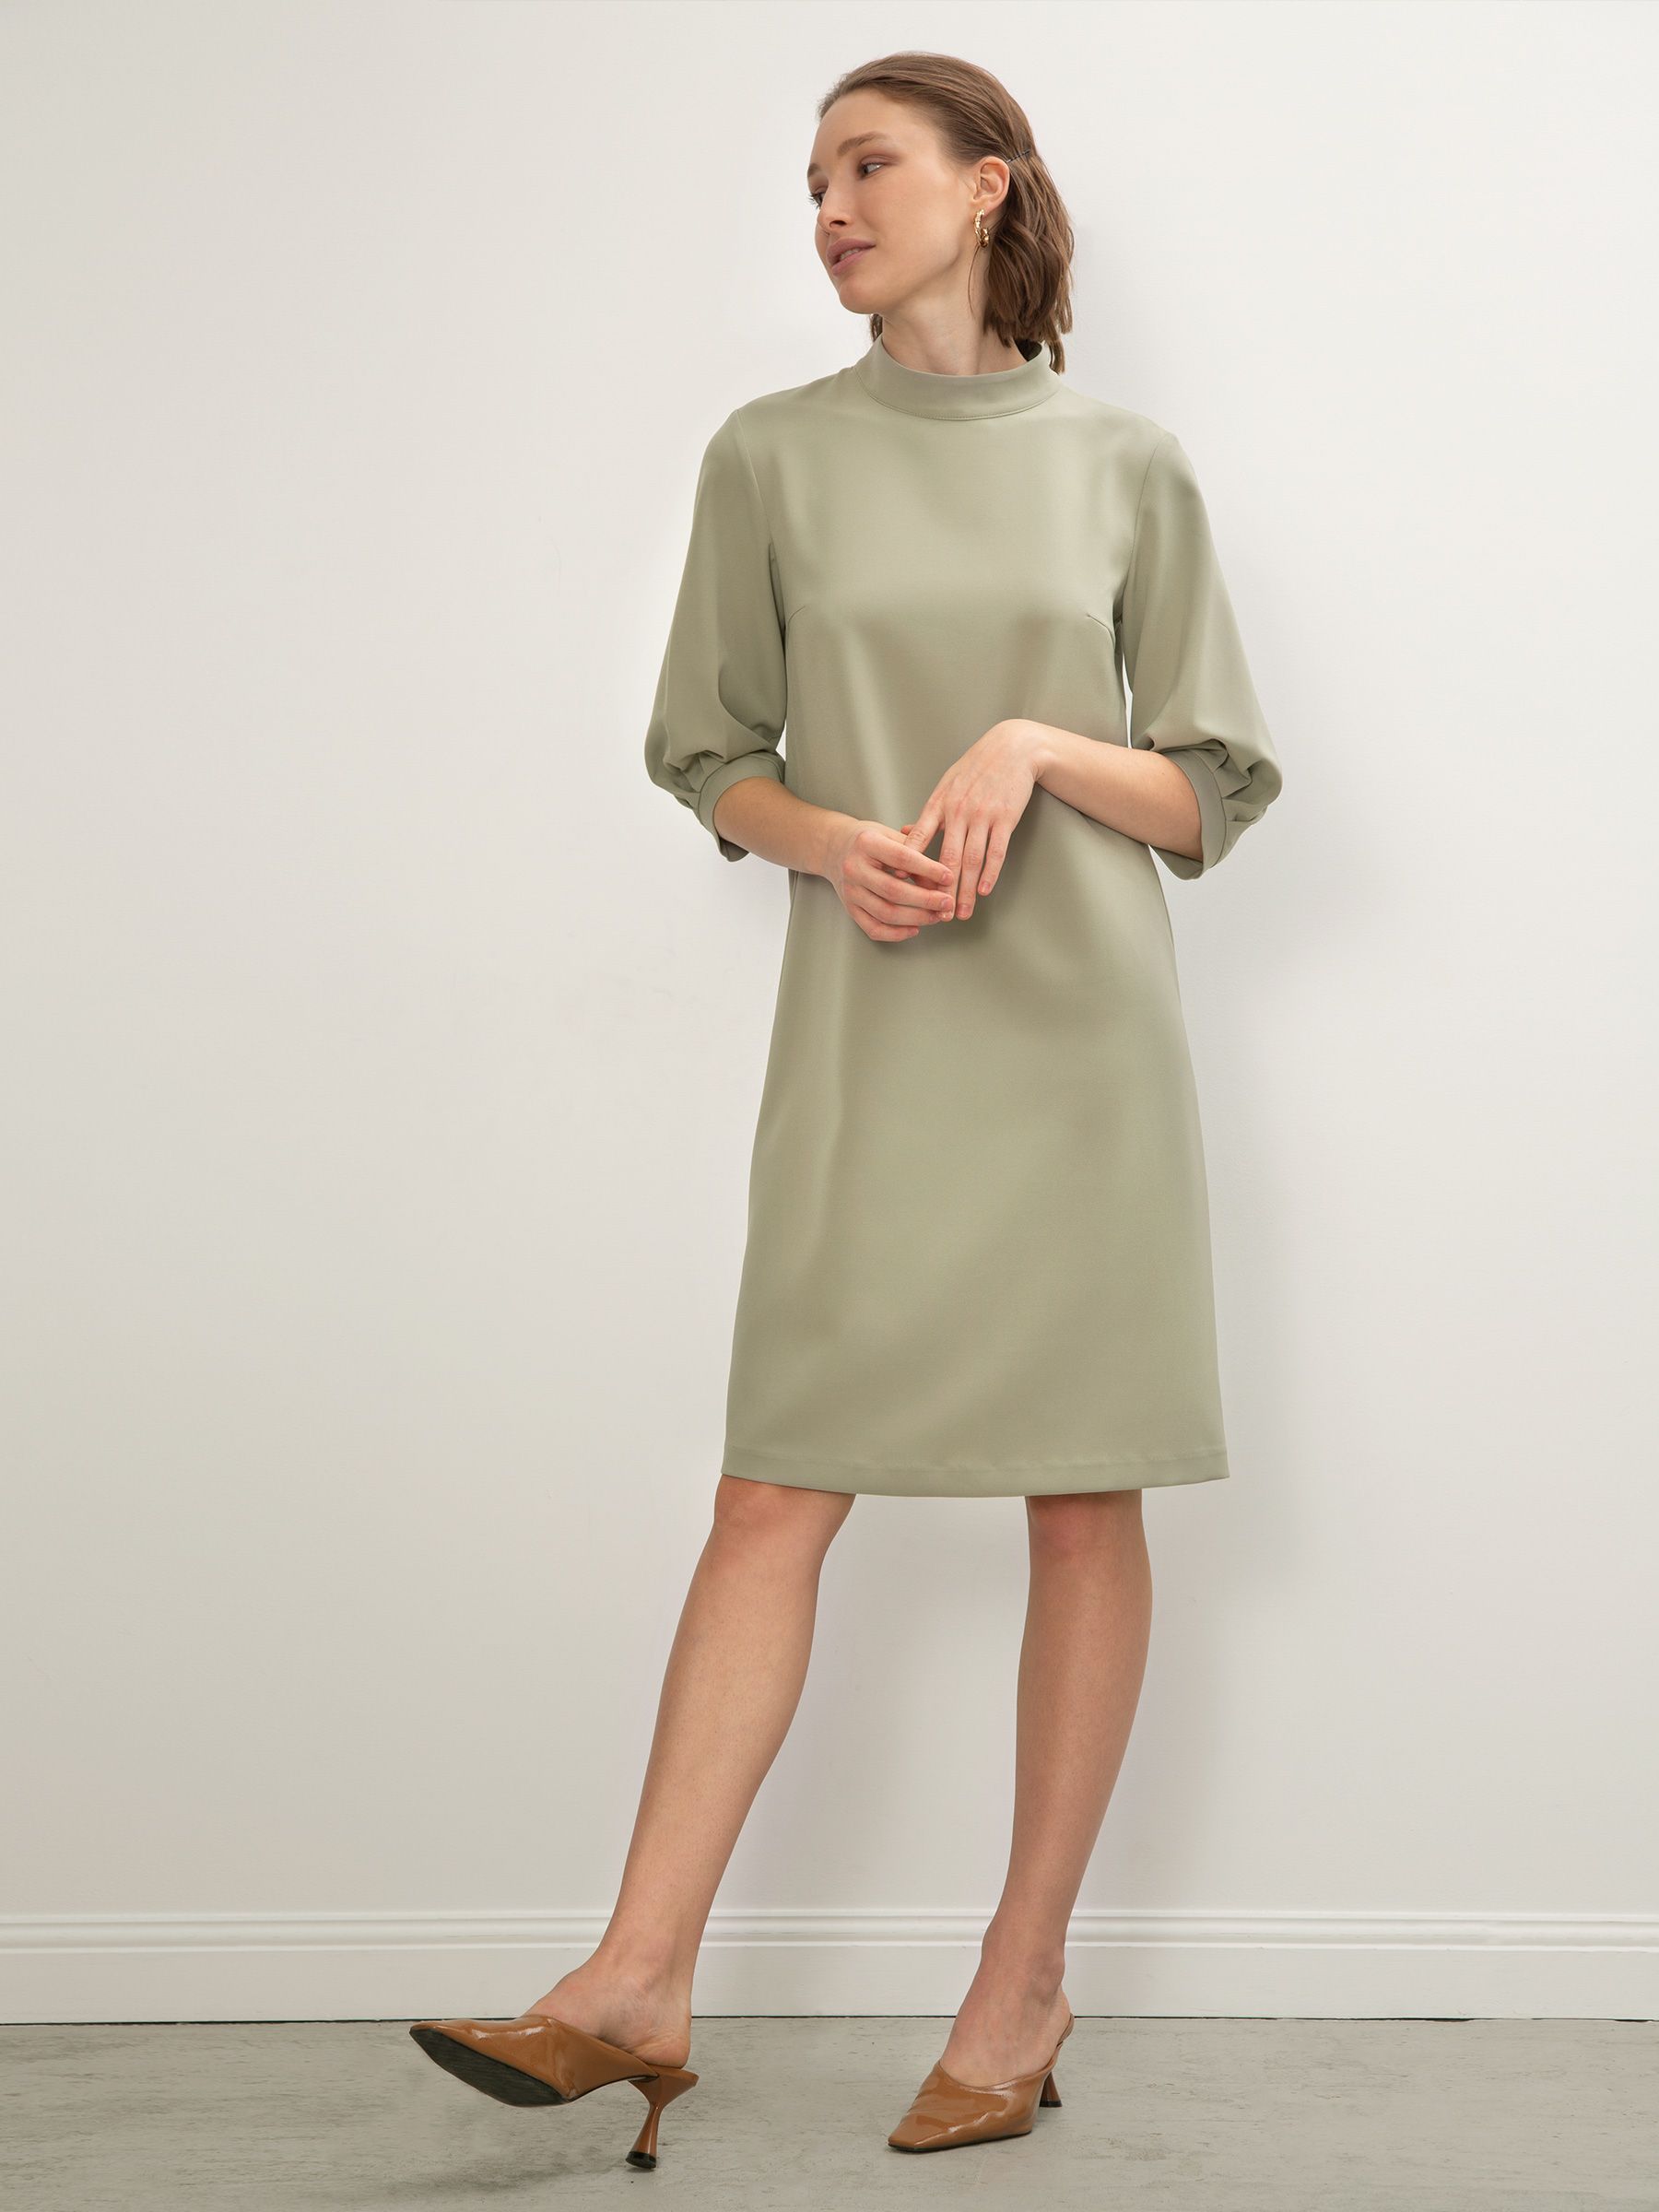 Платье PL1072/olive